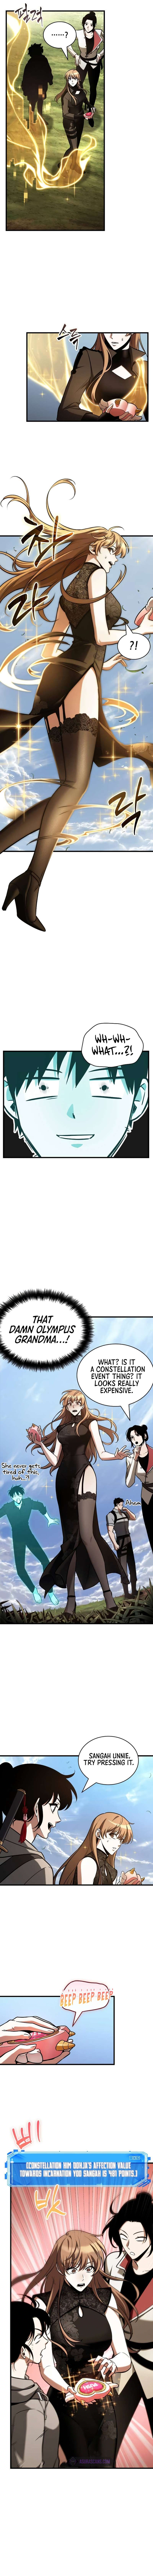 Omniscient Reader's View Manga Manga Chapter - 193 - image 4